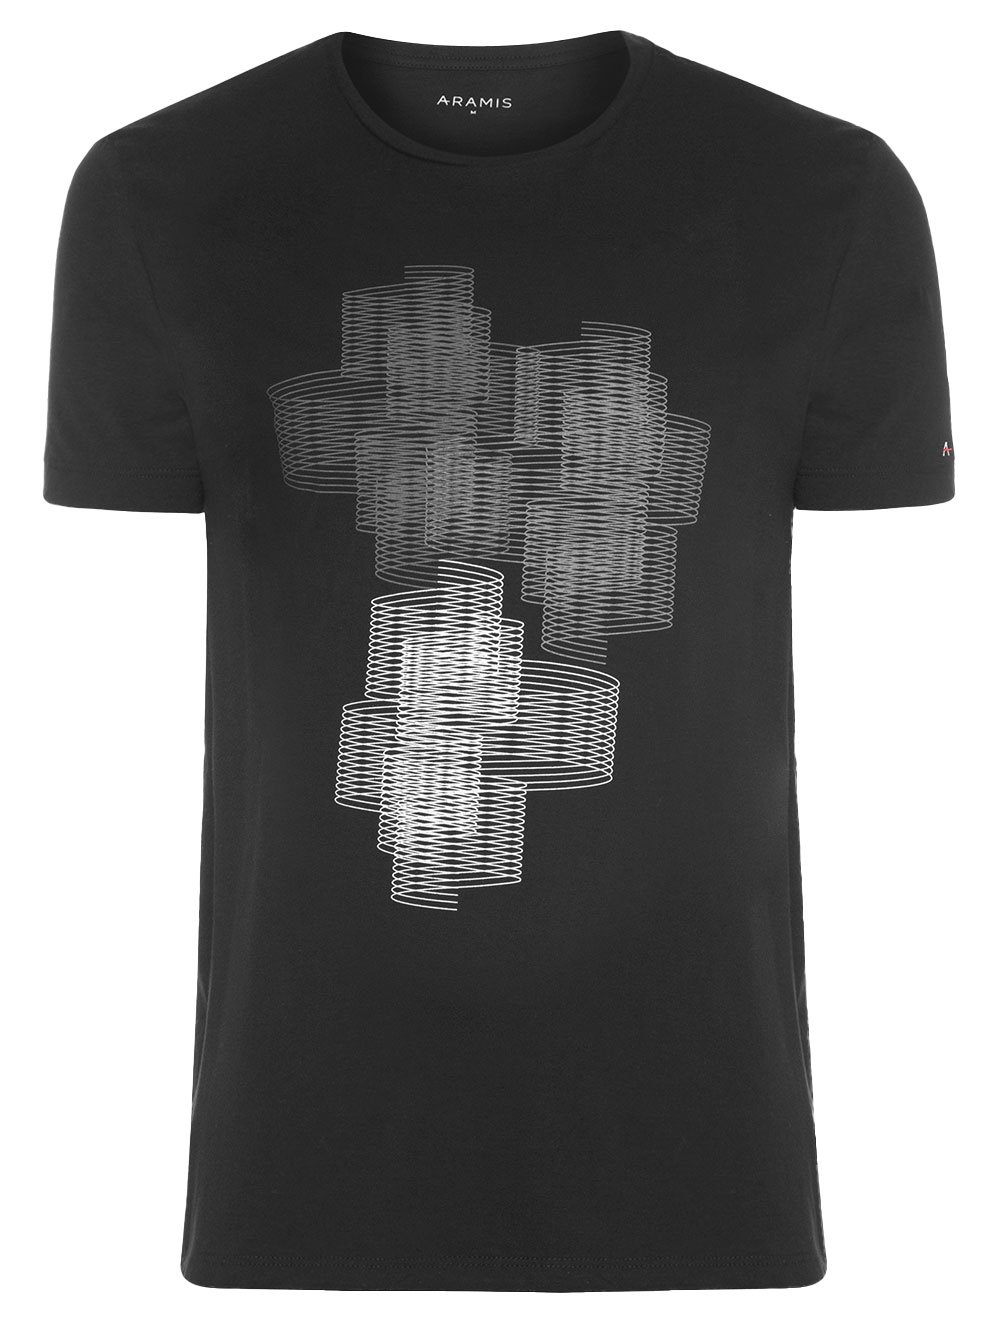 Camiseta Aramis Masculina Spiral Print Preta